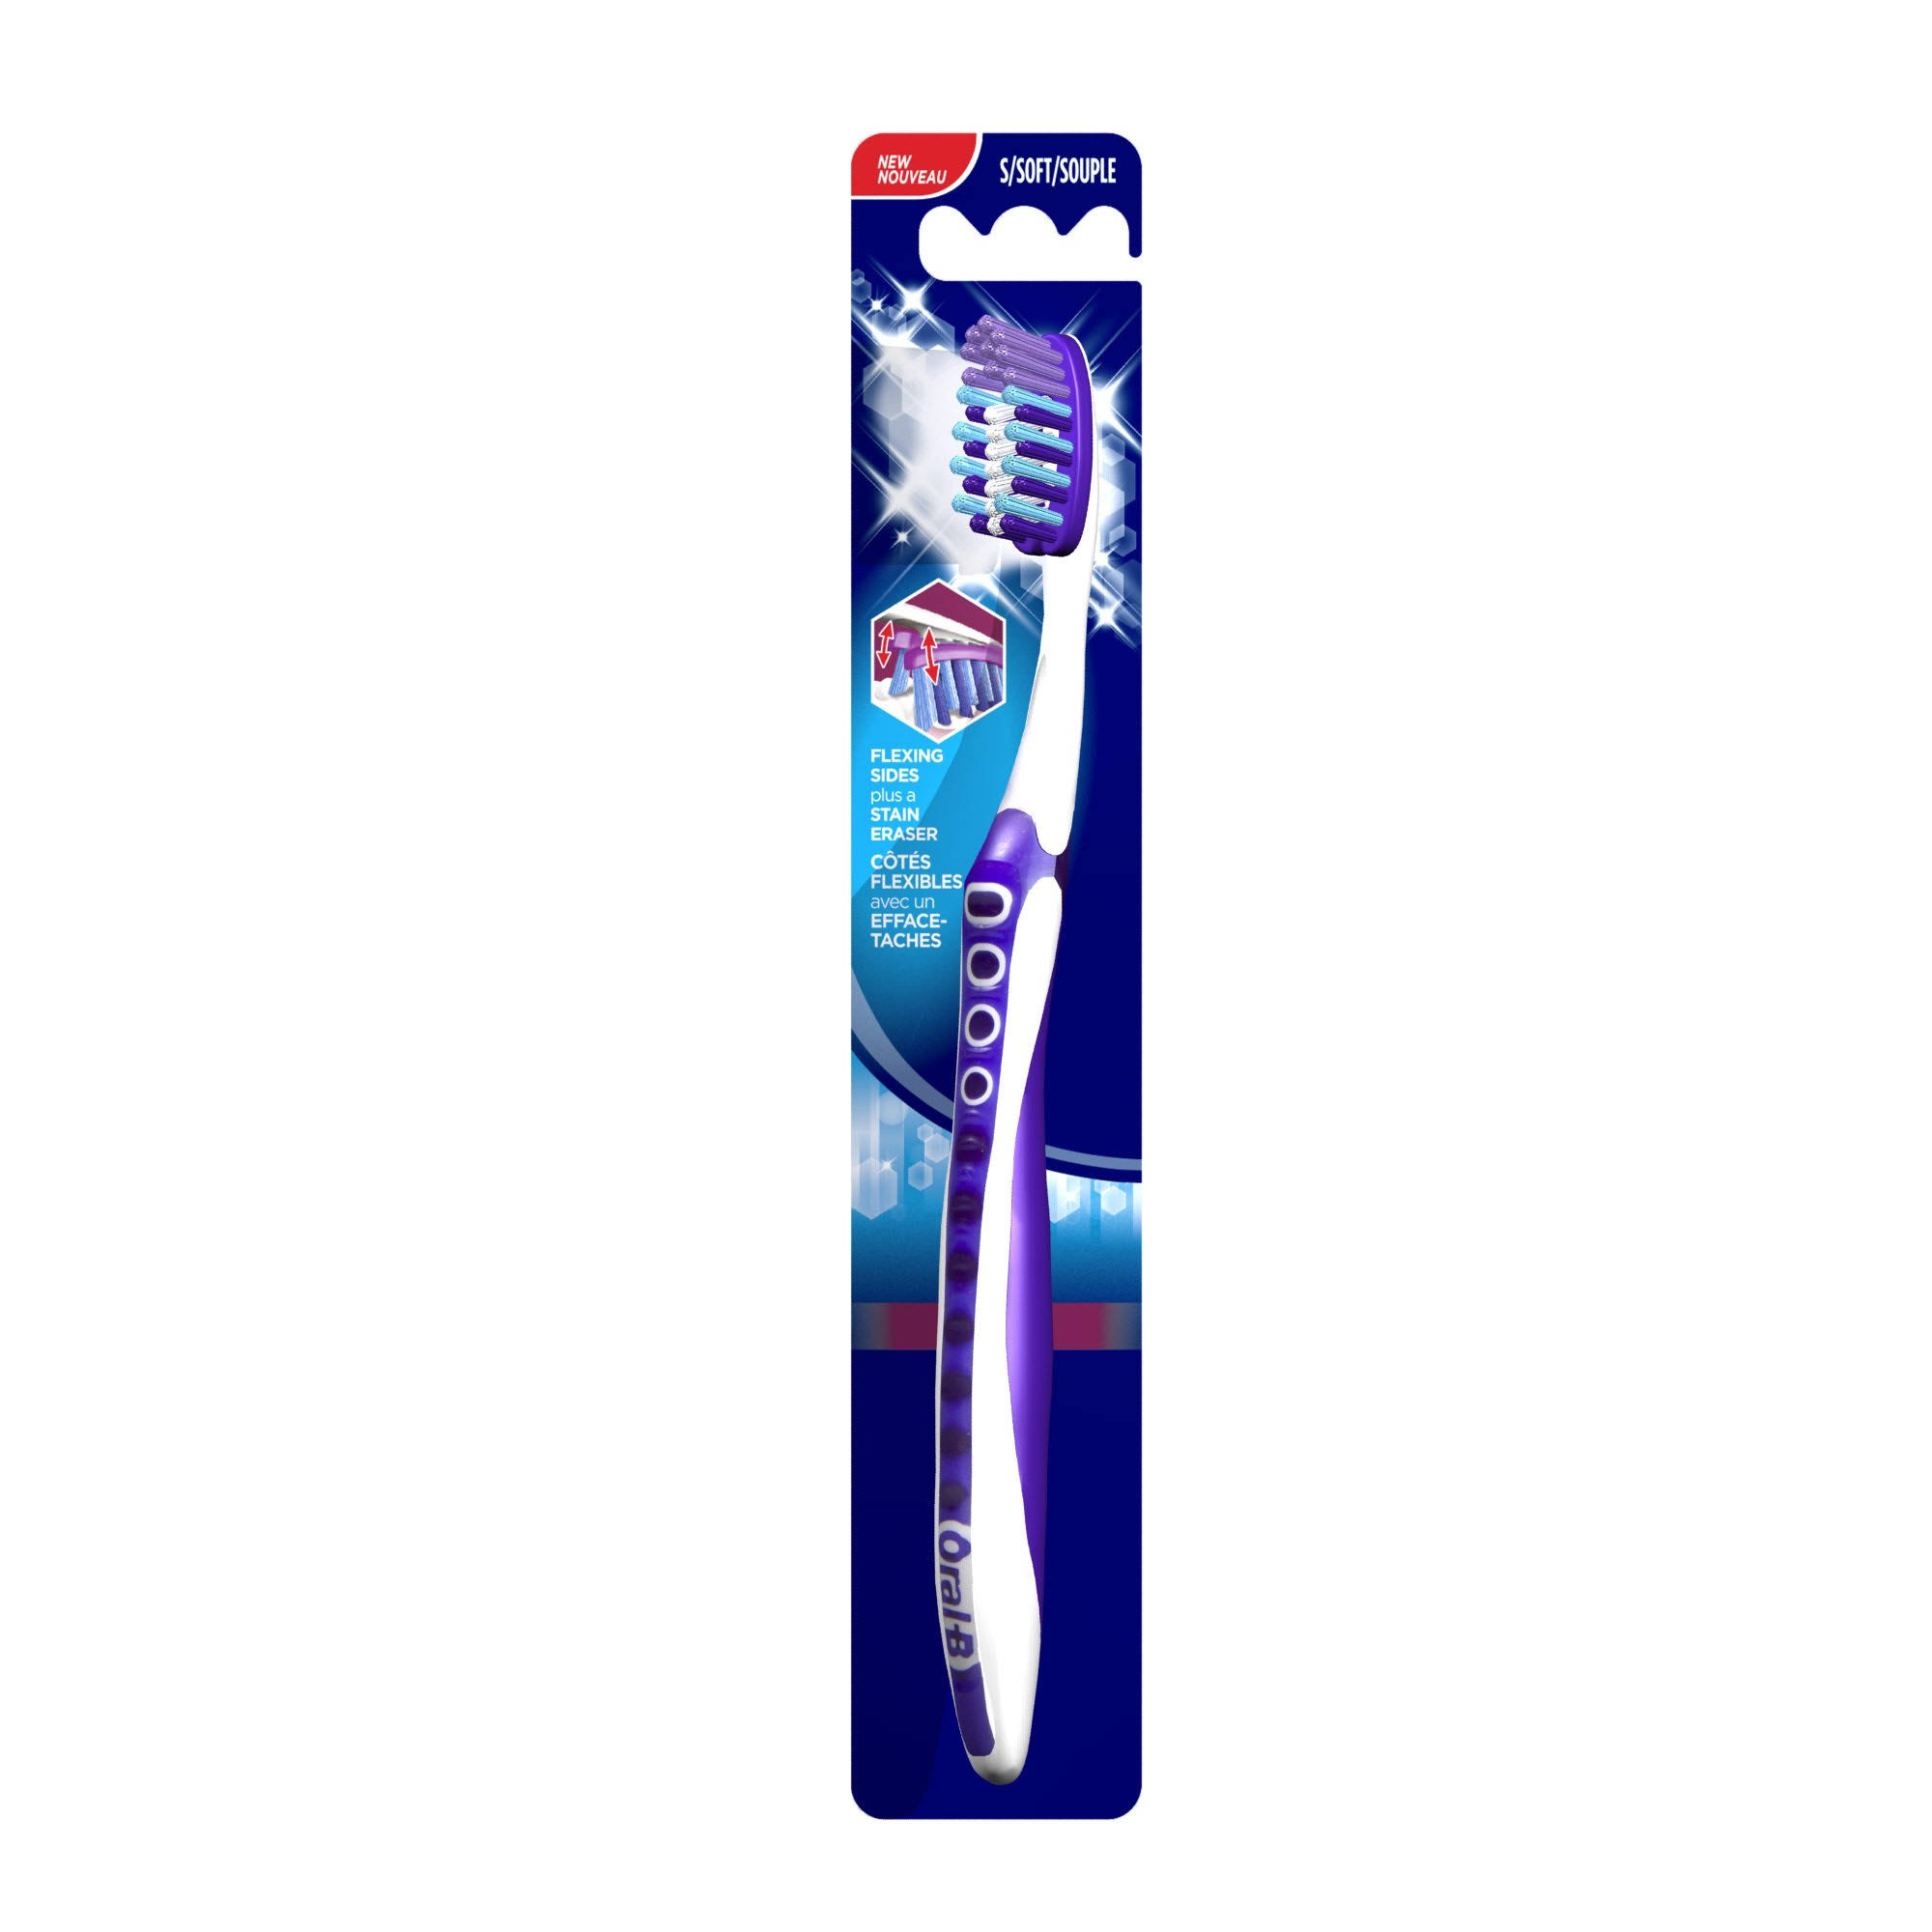 Oral B 3D White Pro Flex Manual Toothbrush - Soft